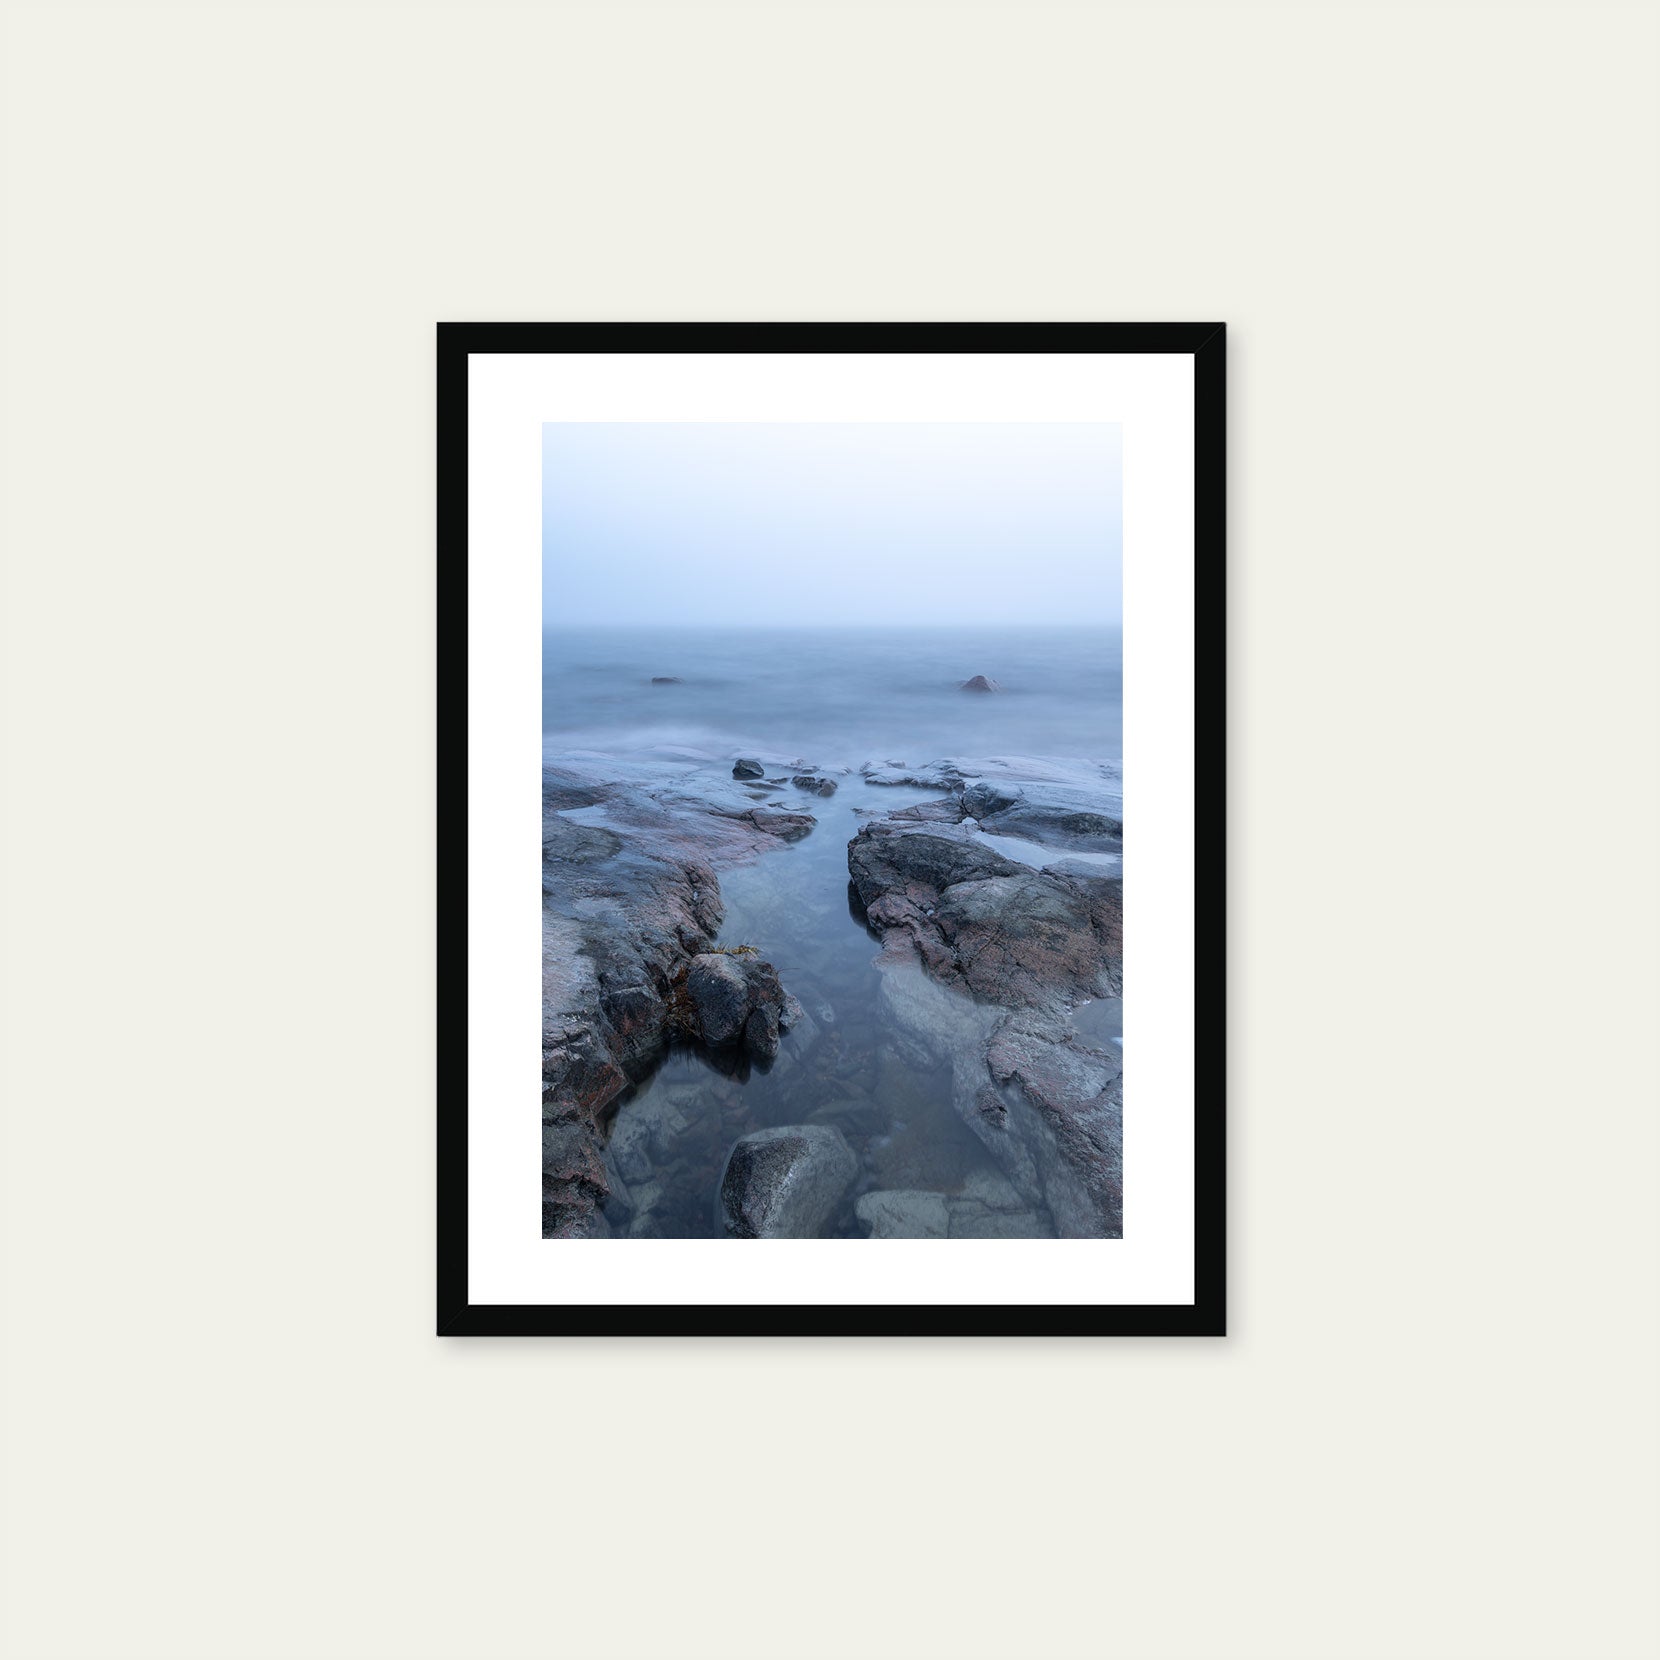 A black framed print of a rocky coastline in fog